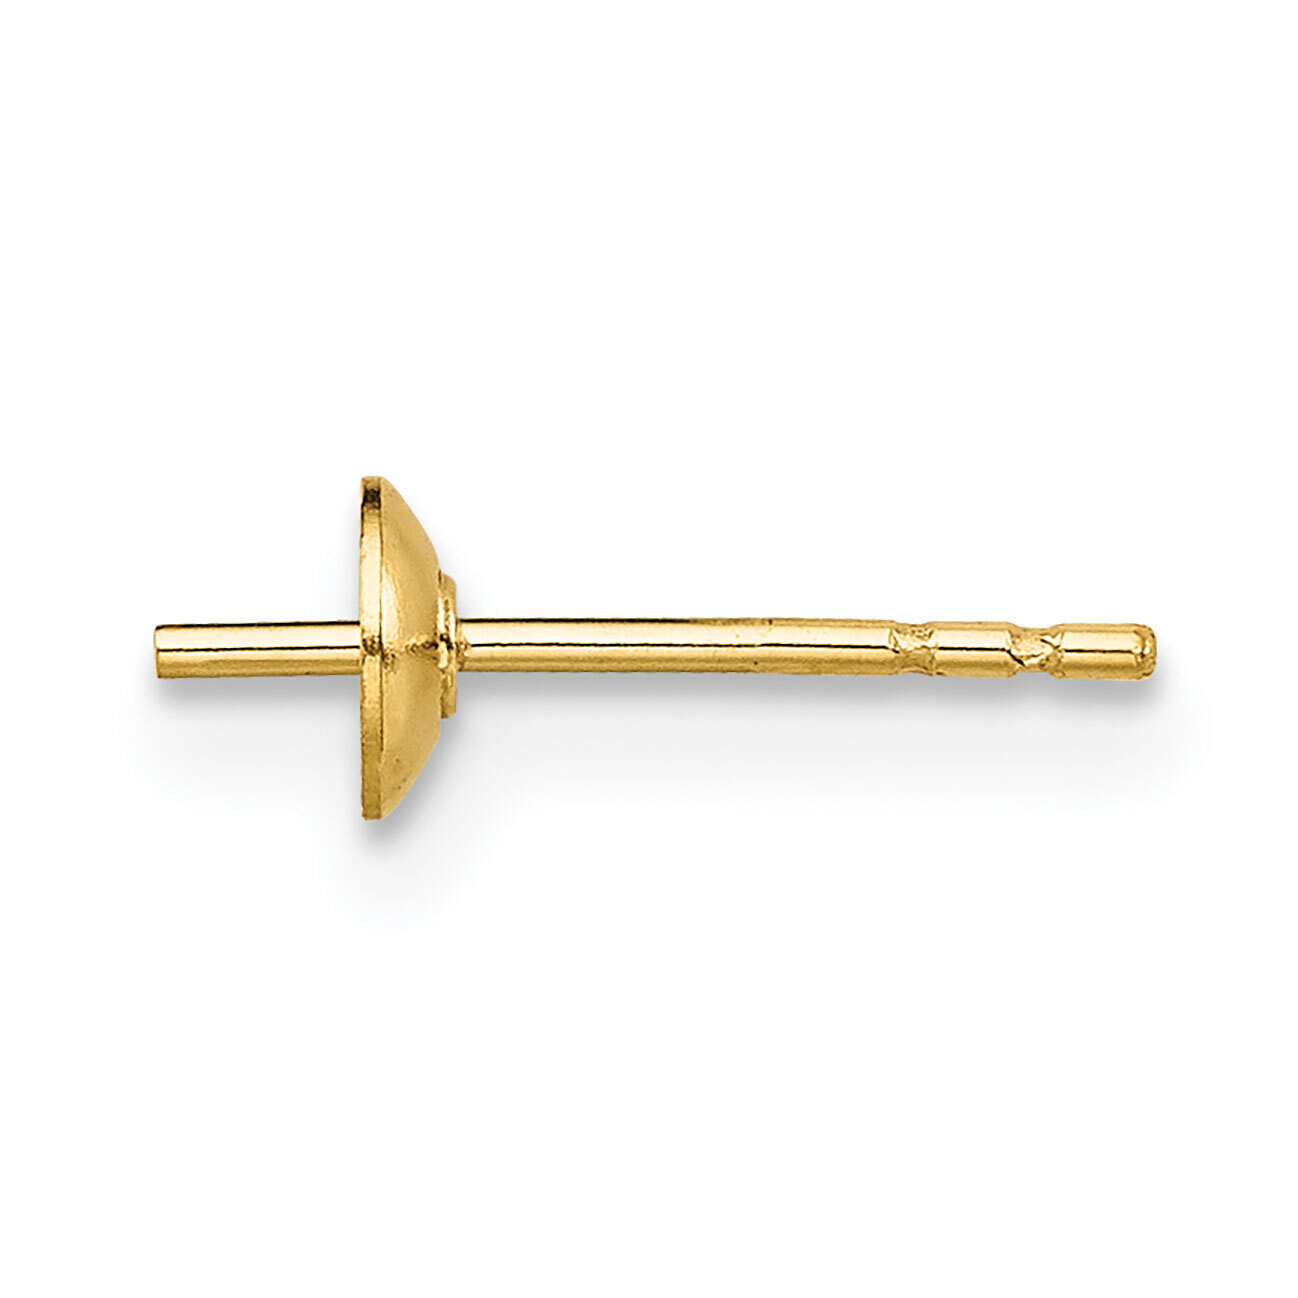 6.0 - 7.0mm Pearl Stud Earring Setting Gold Filled GF3023